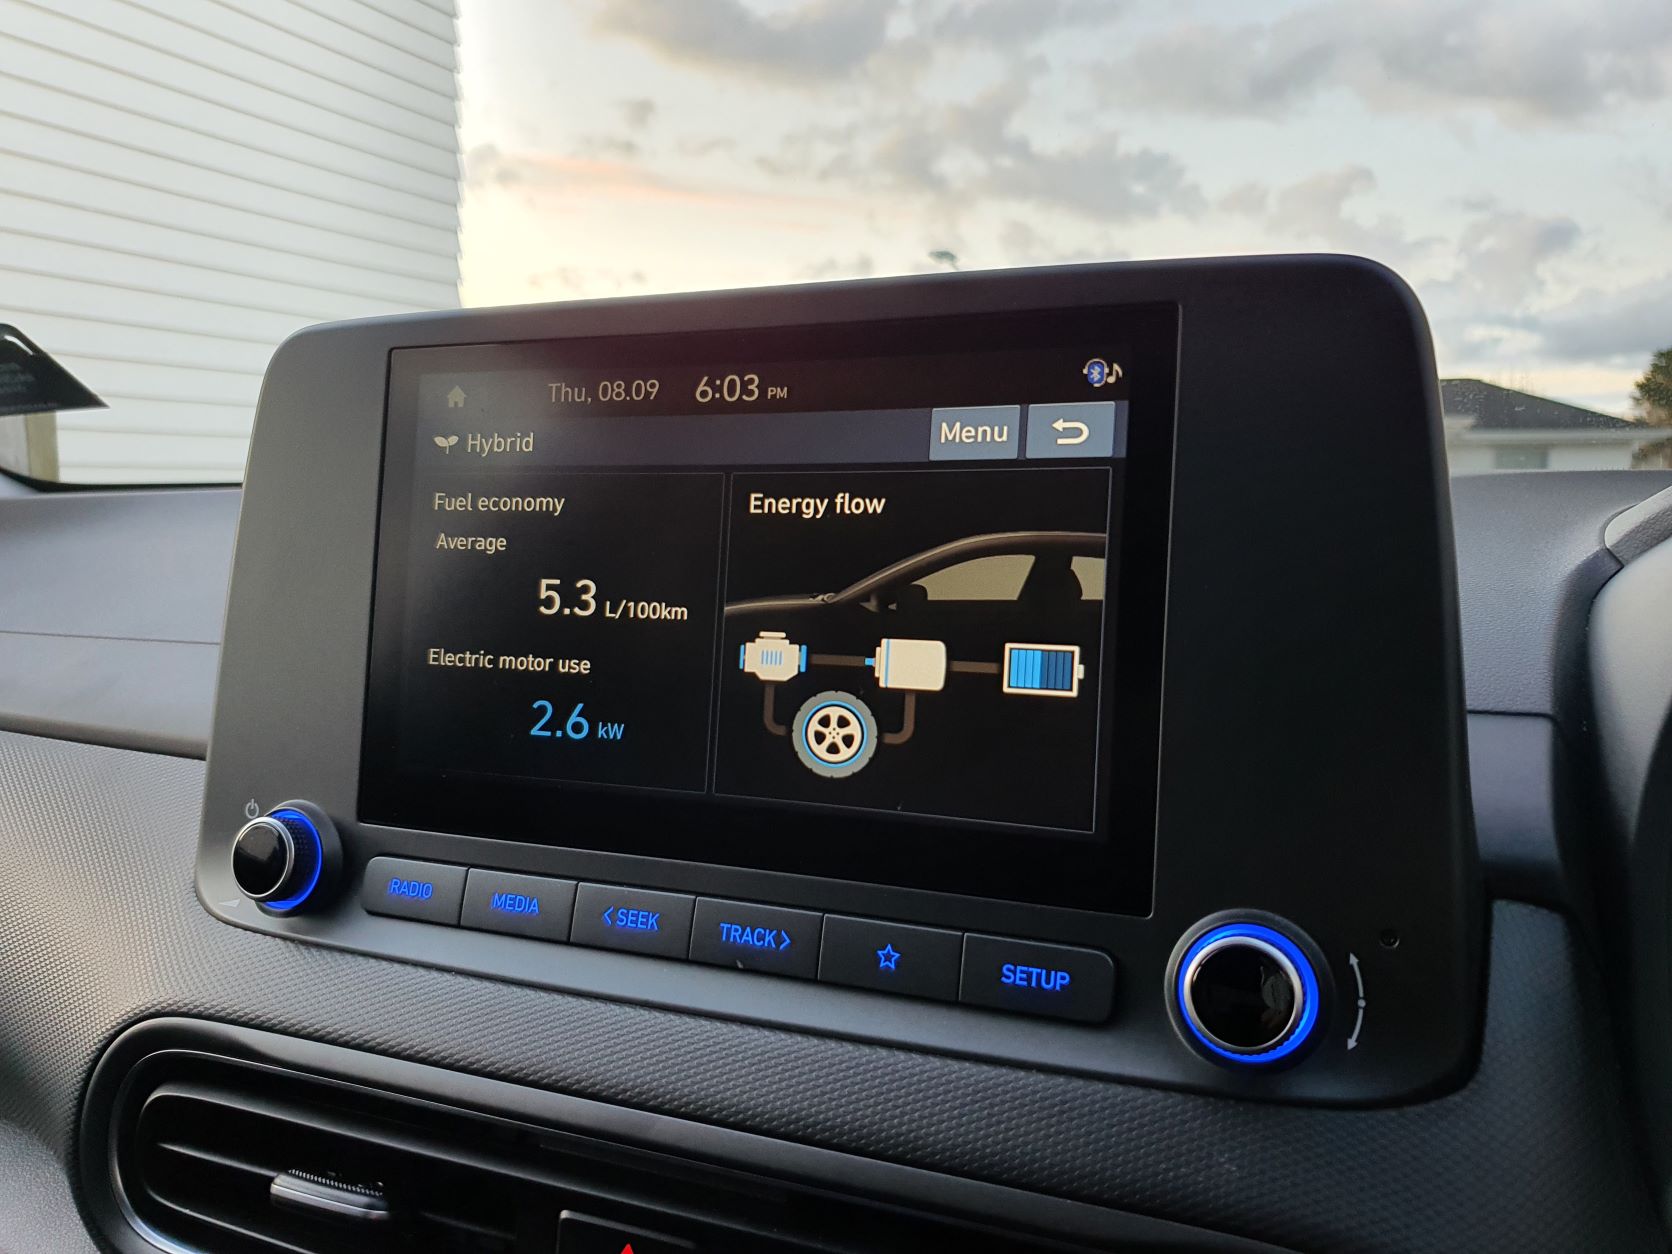 Hybrid view on the infotainment screen of the 2022 Hyundai Kona Hybrid